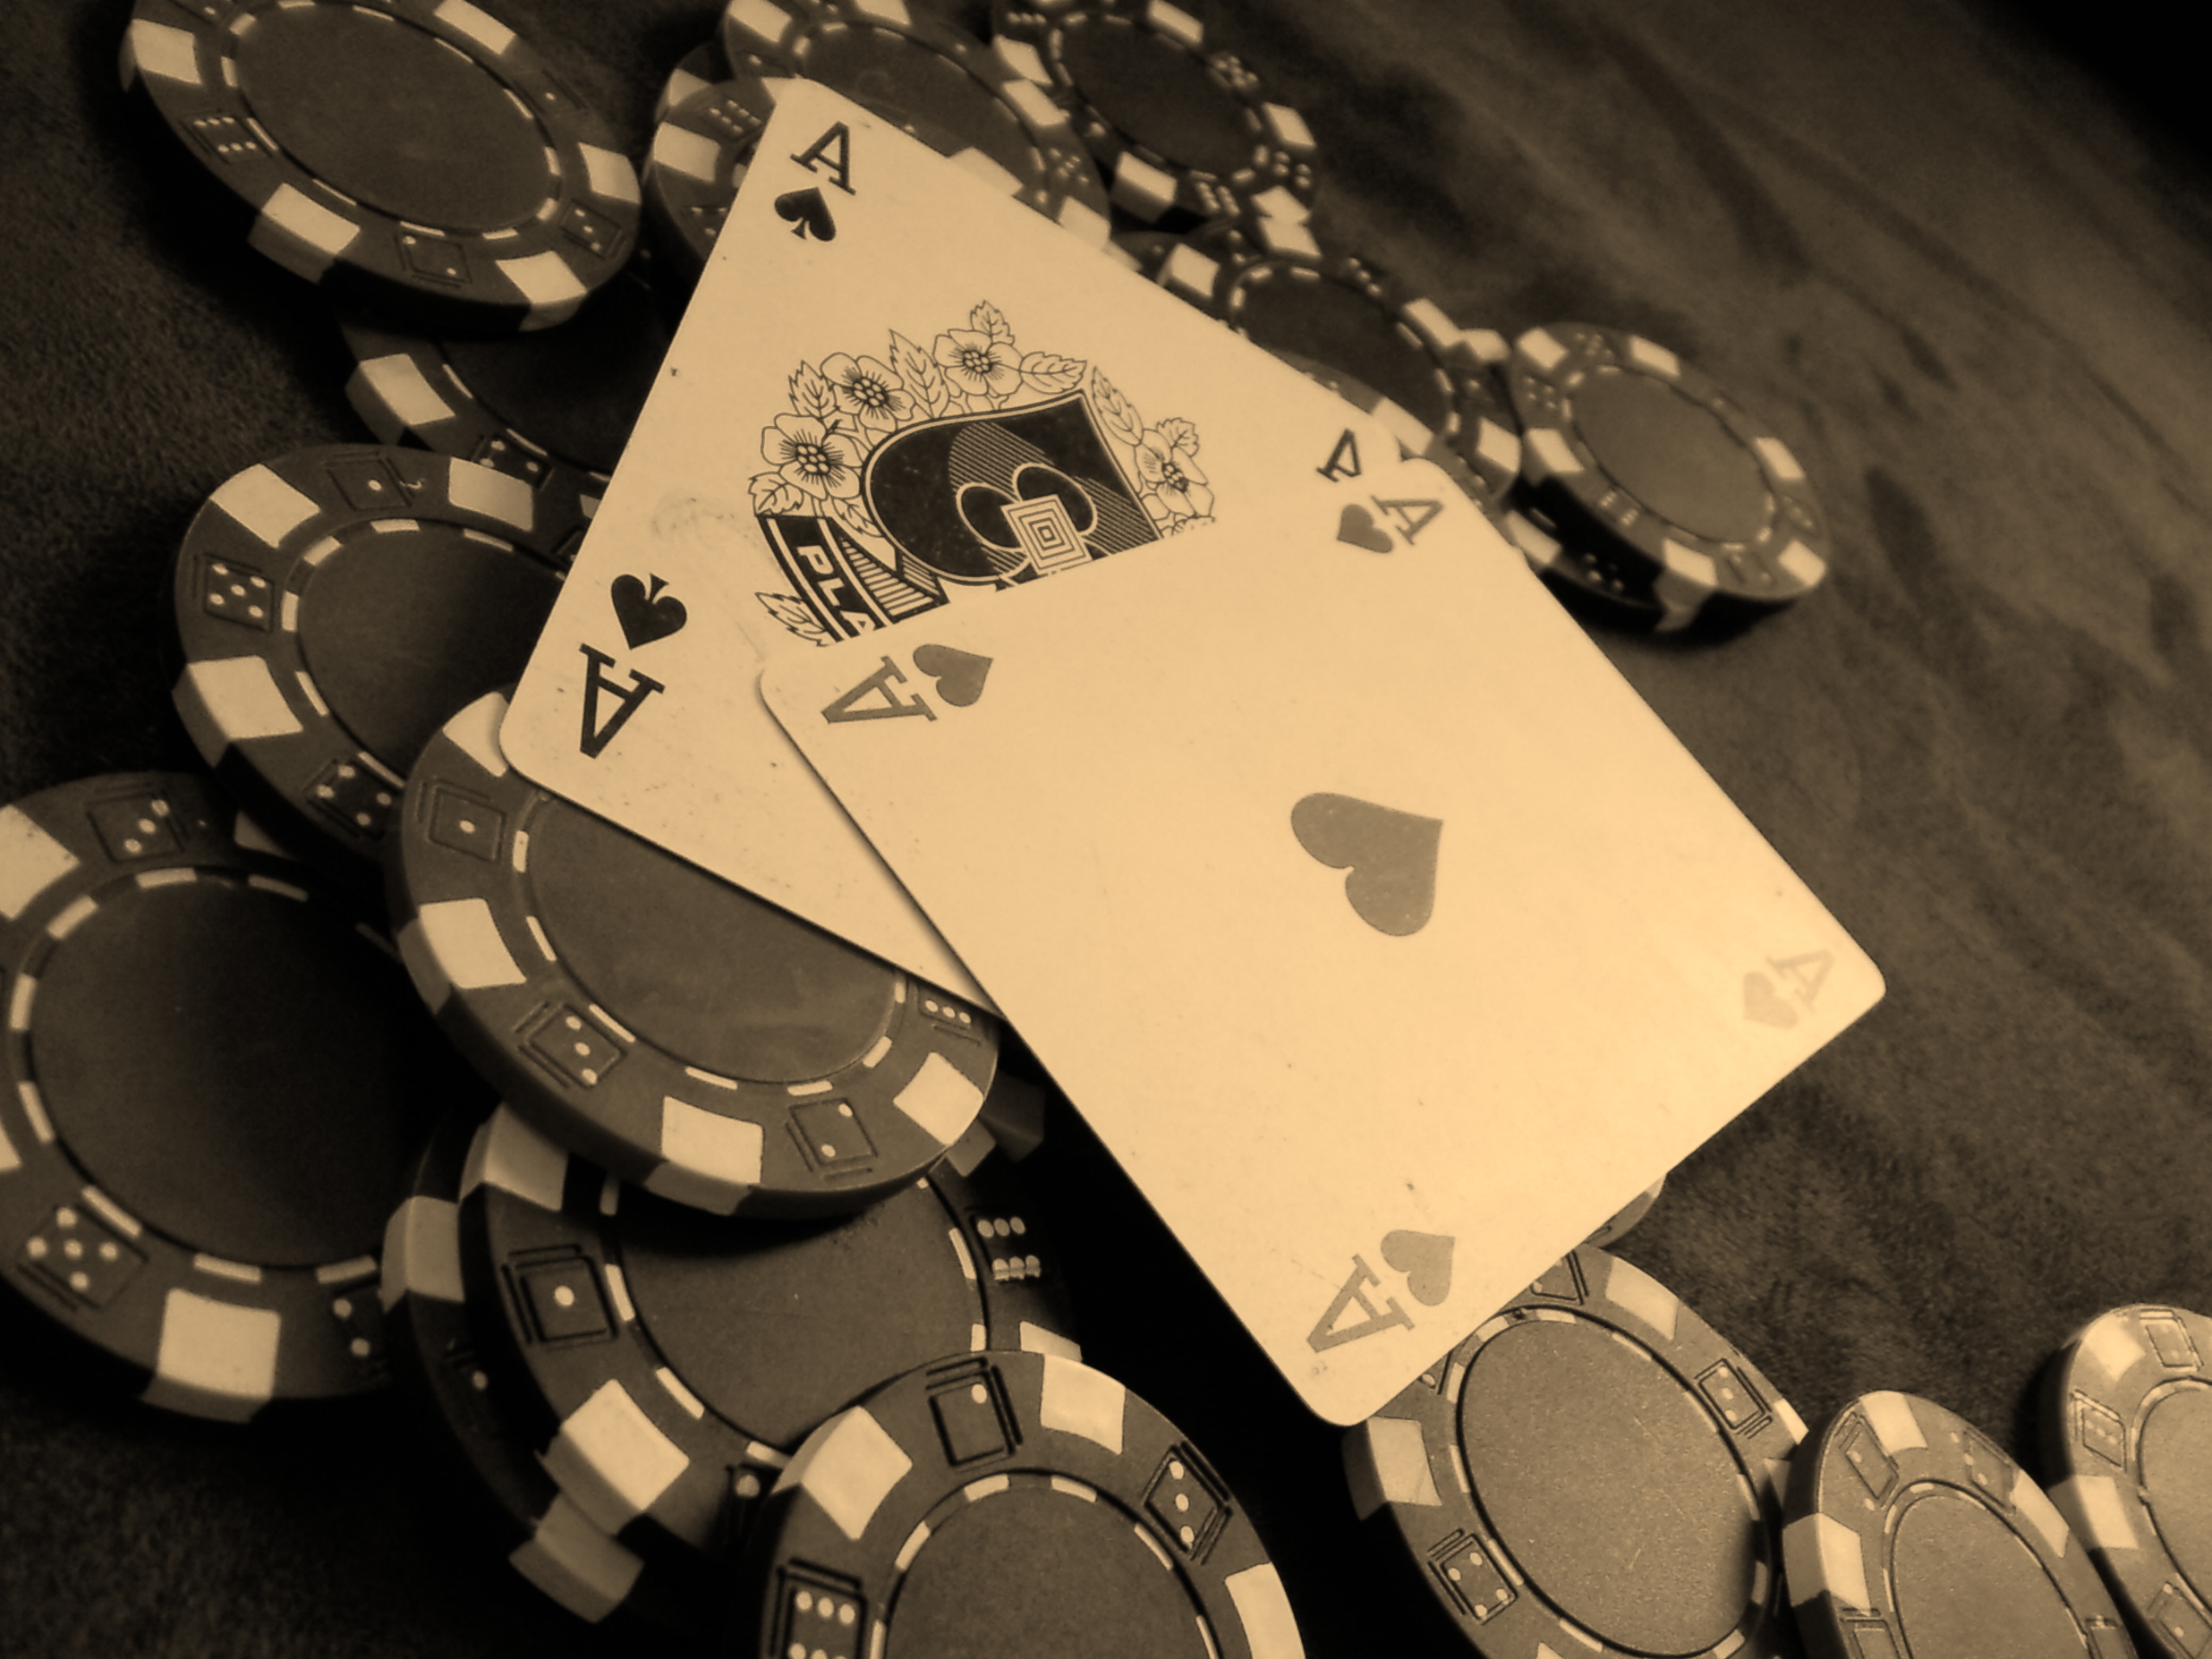 fold poker